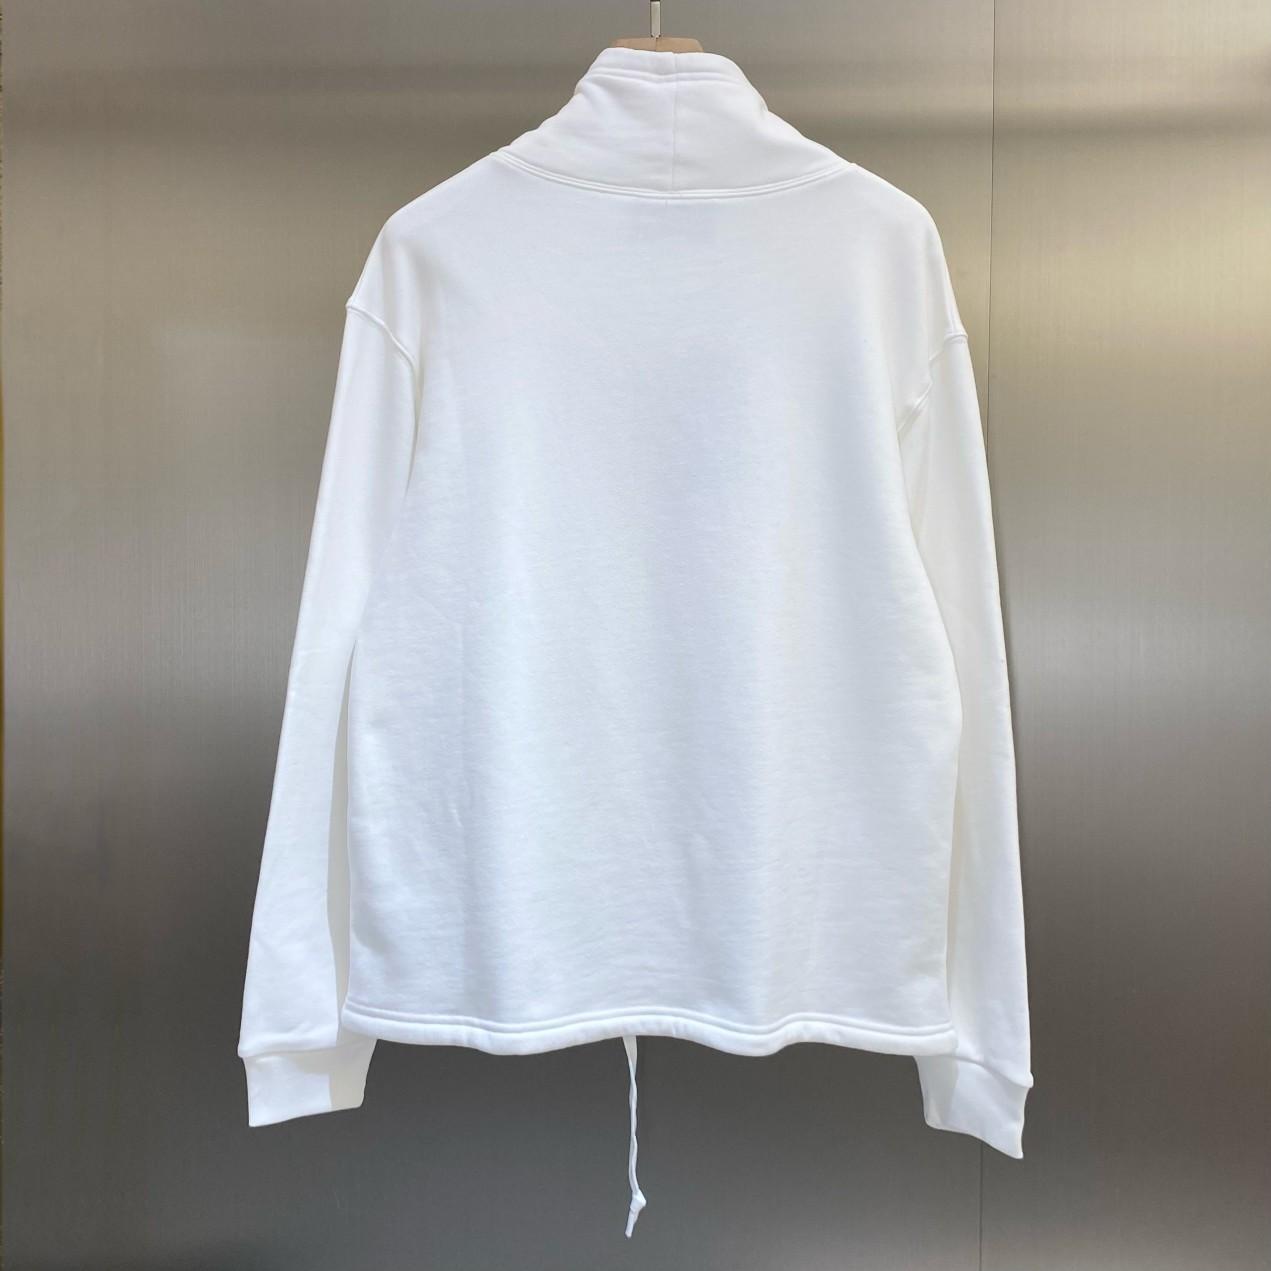 gucci-vintage-logo-cotton-sweatshirt-5003_16844005873-1000